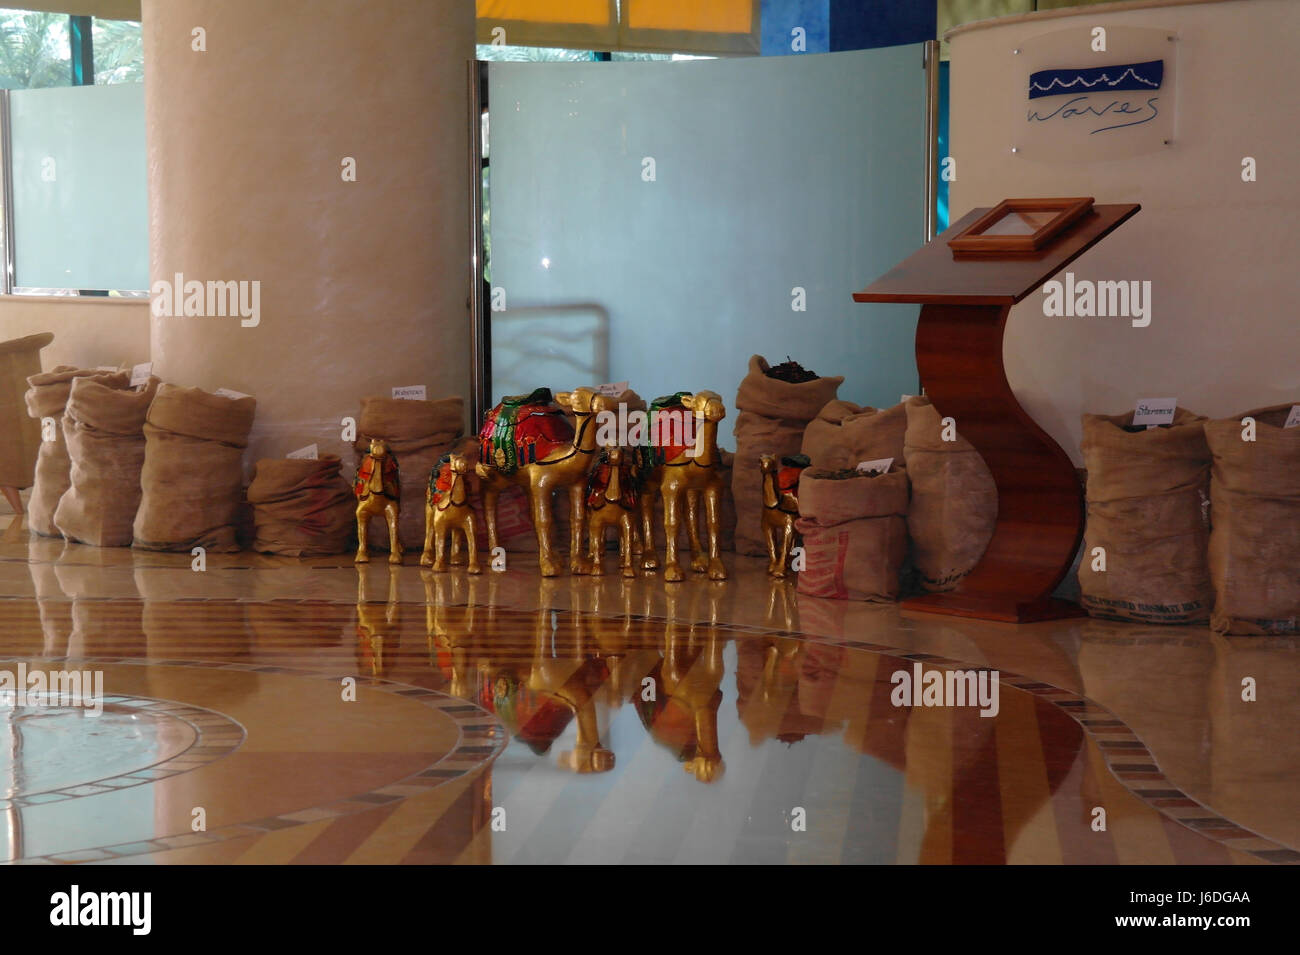 Six gold camel images in front of spice sacks reflecting glossy tiles floor, Waves Restaurant, Le Meridien Hotel, Mina Seyahi Beach Resort, Dubai, UAE Stock Photo